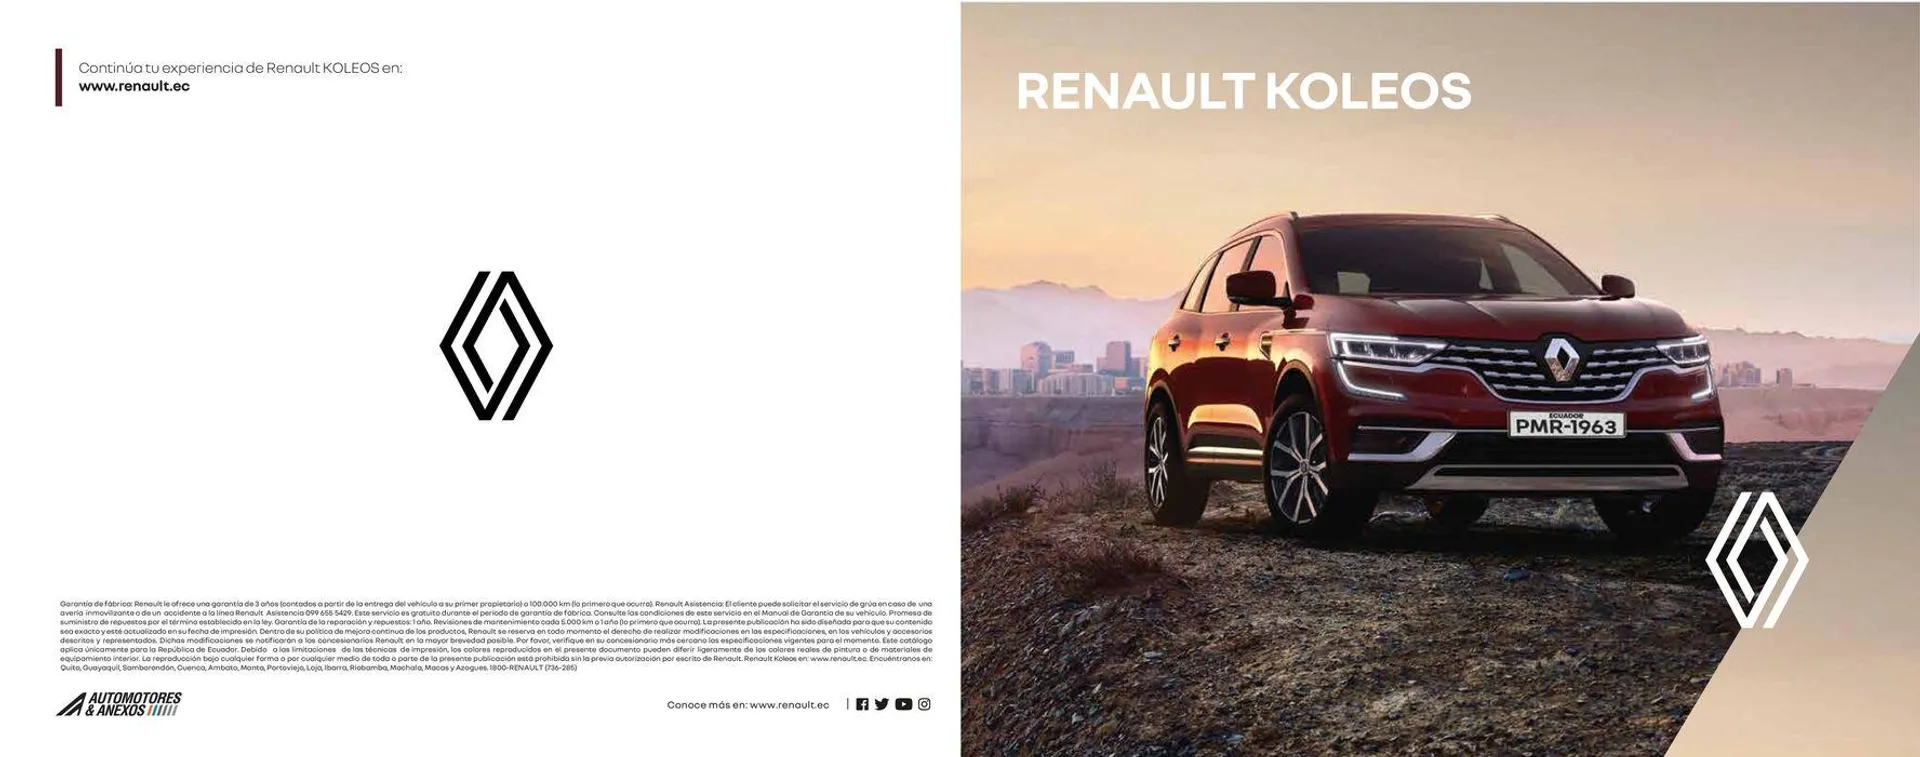 Renault KOLEOS - 1